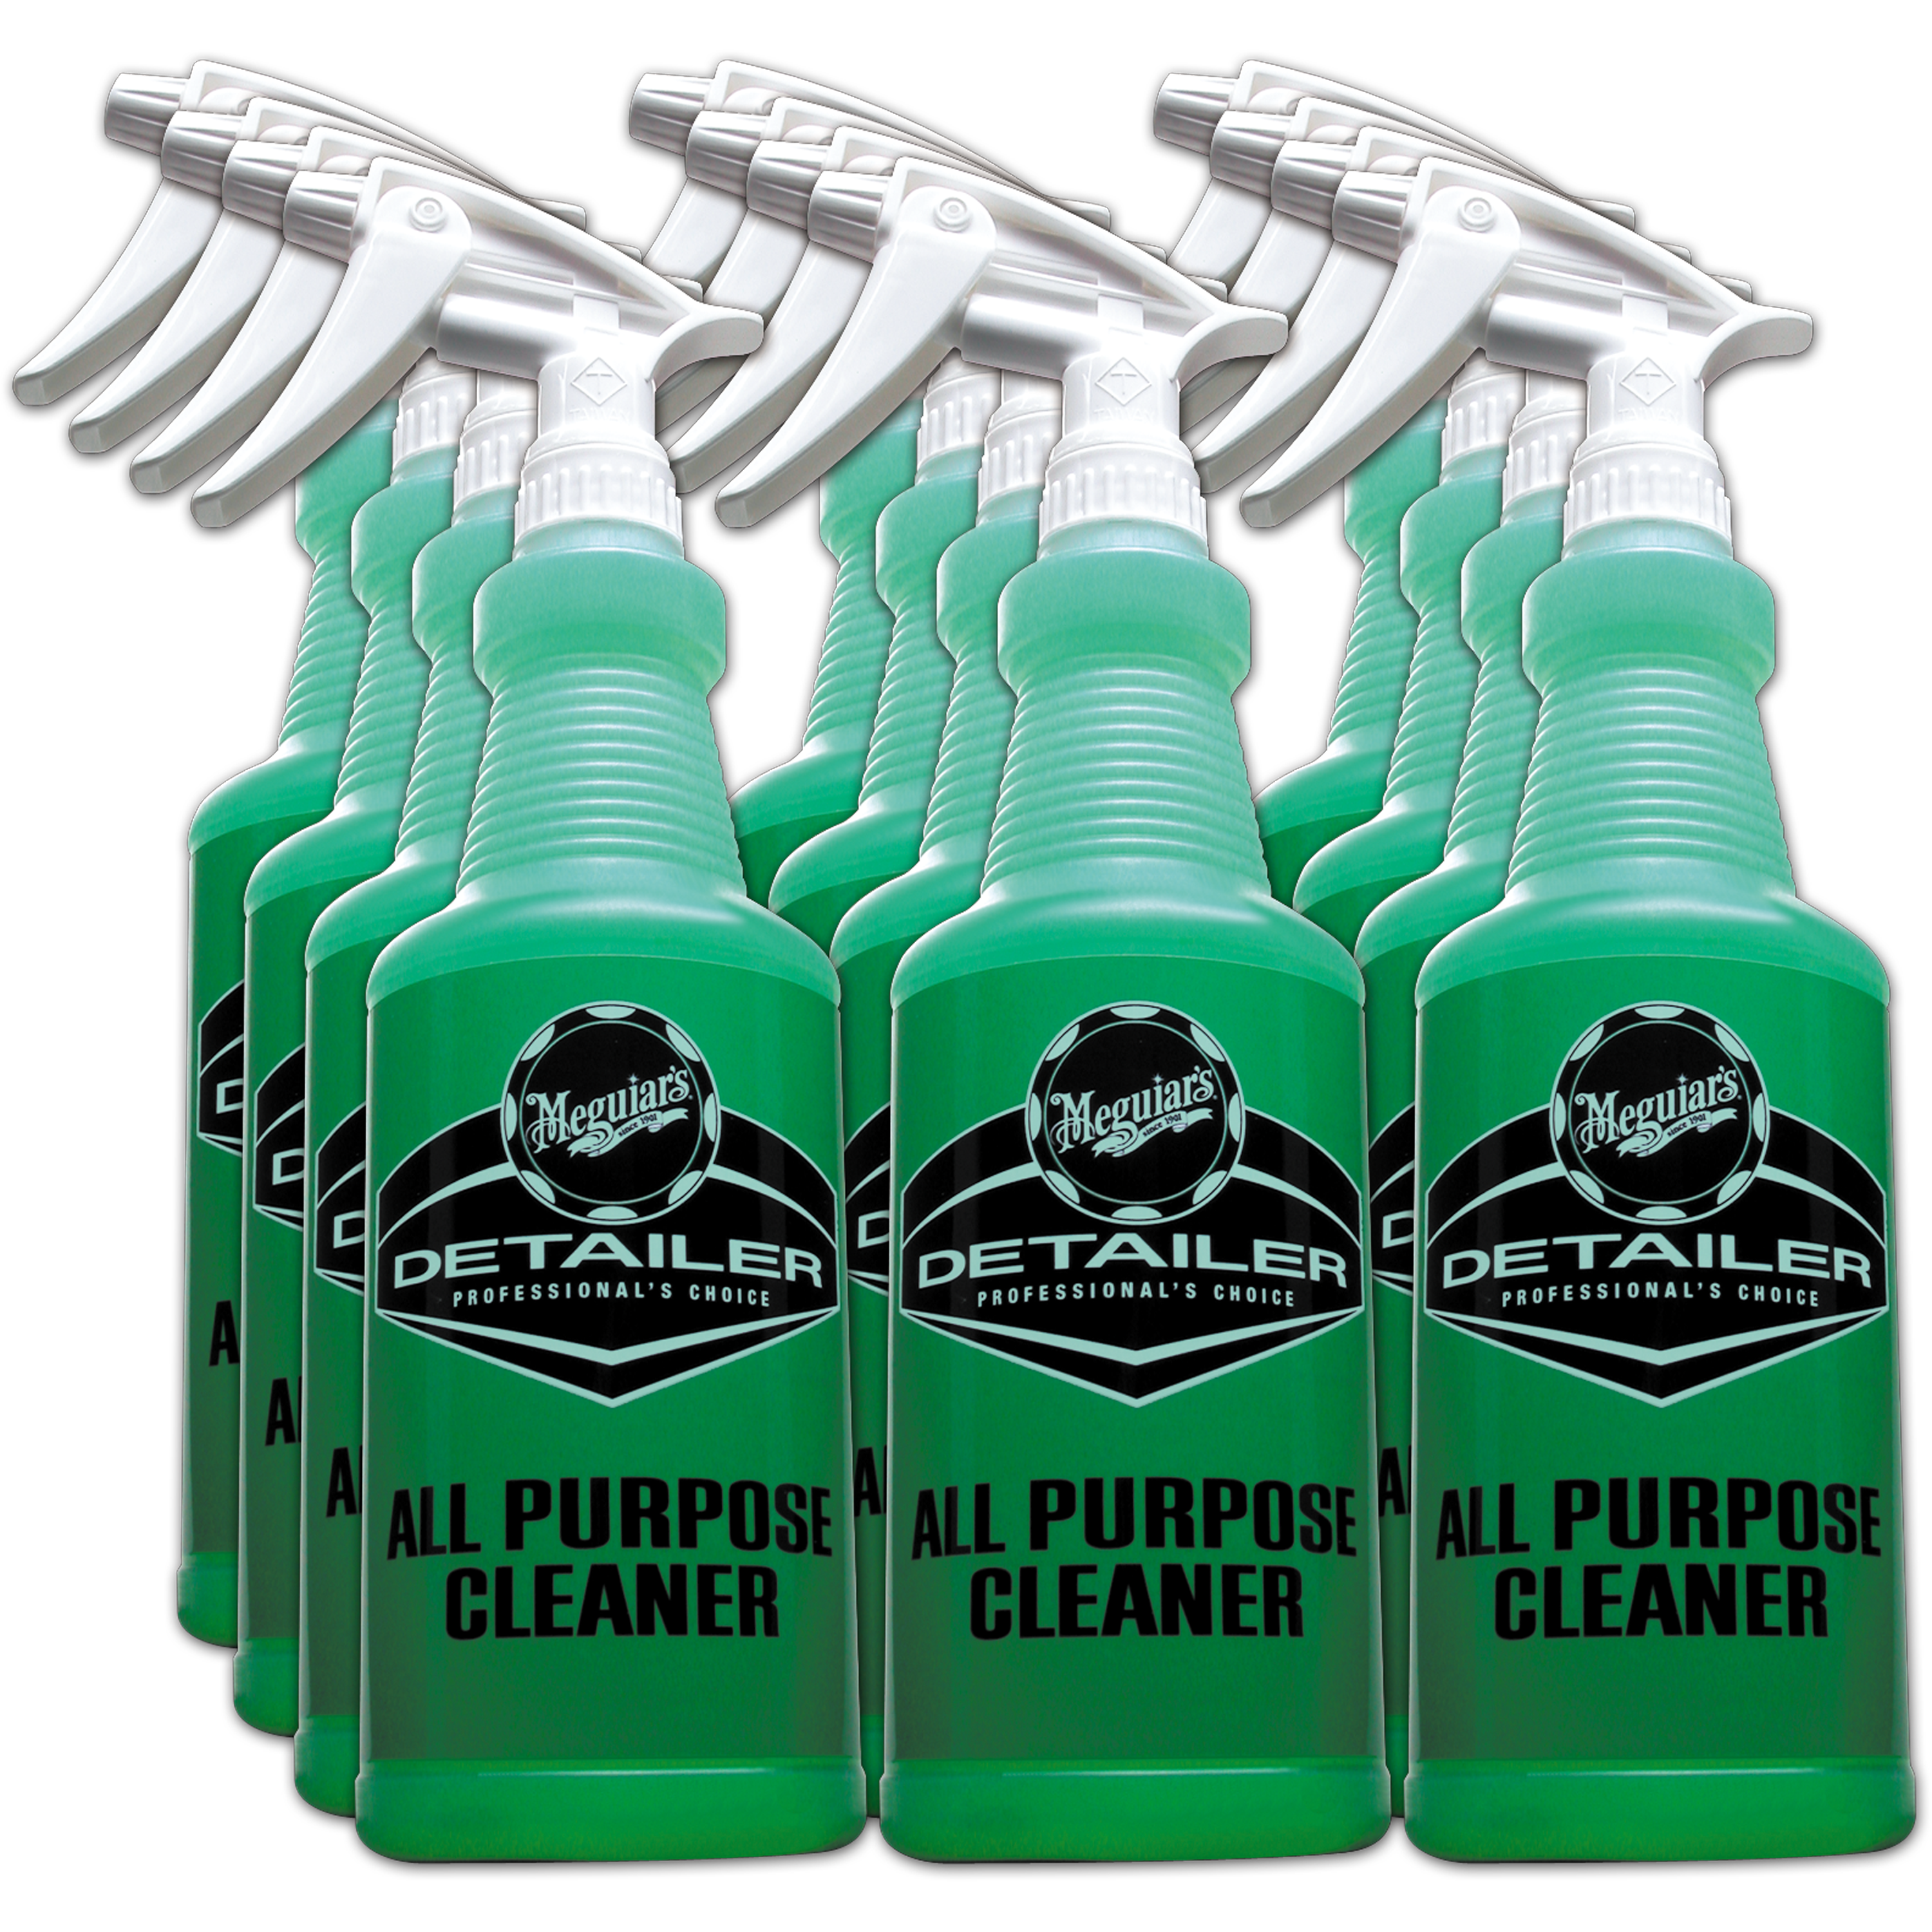 All Purpose Cleaner Bottle